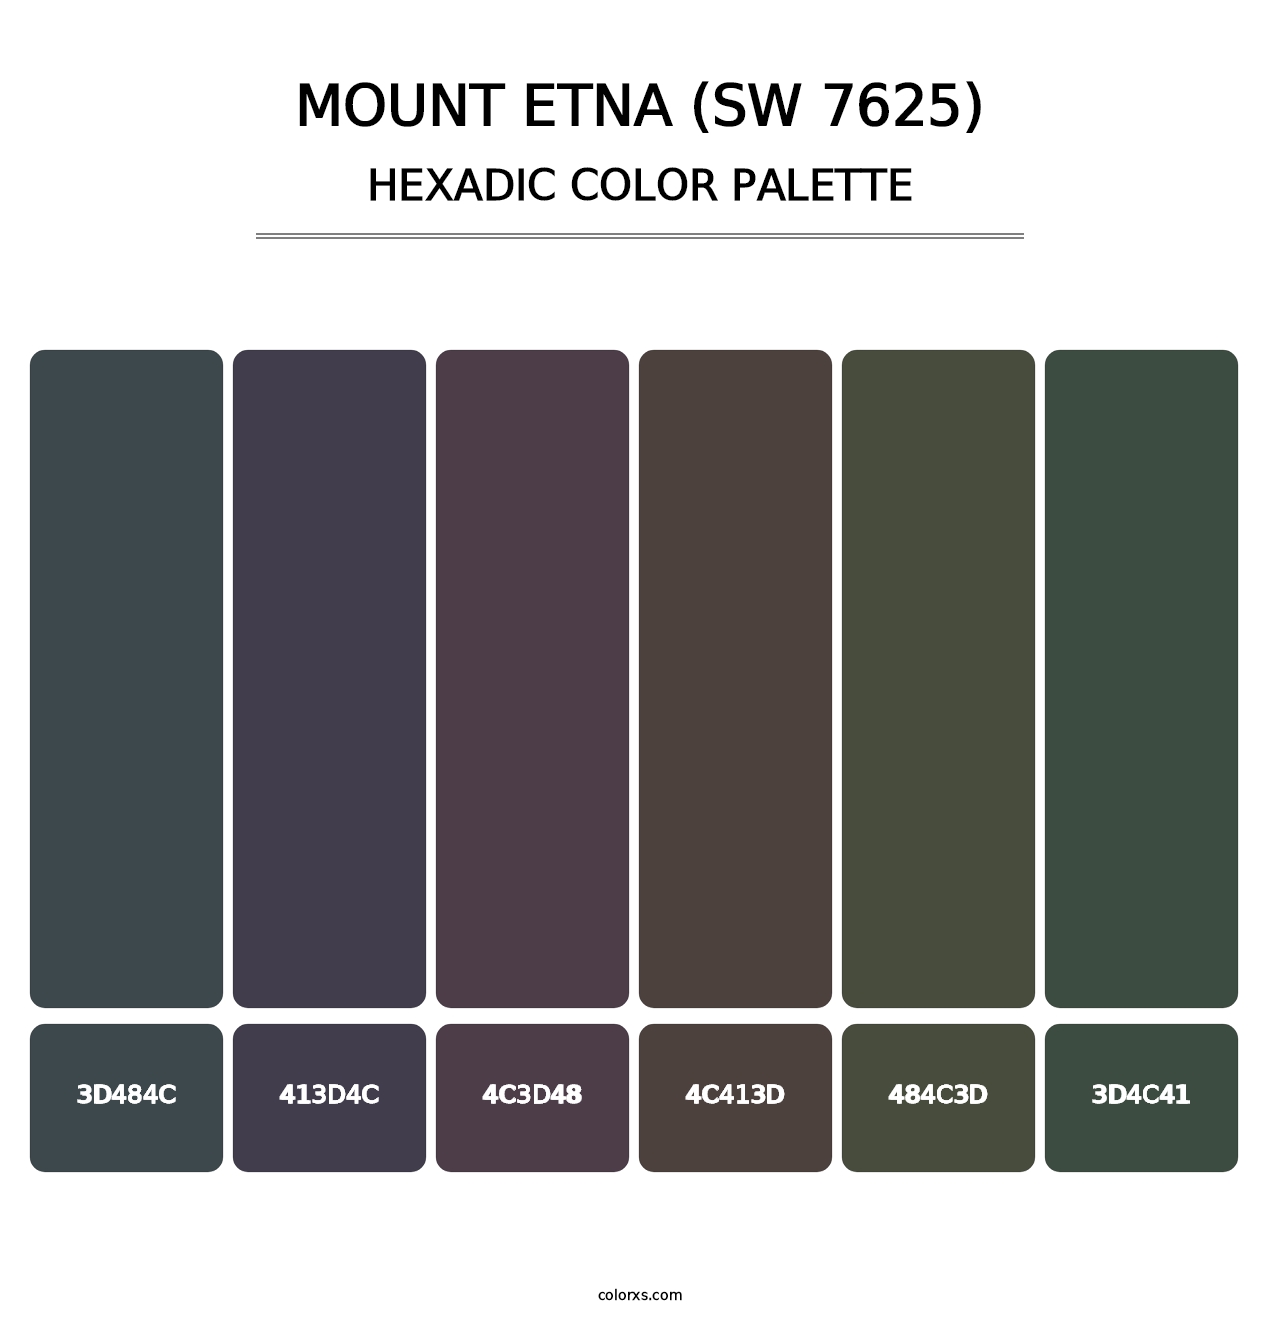 Mount Etna (SW 7625) - Hexadic Color Palette